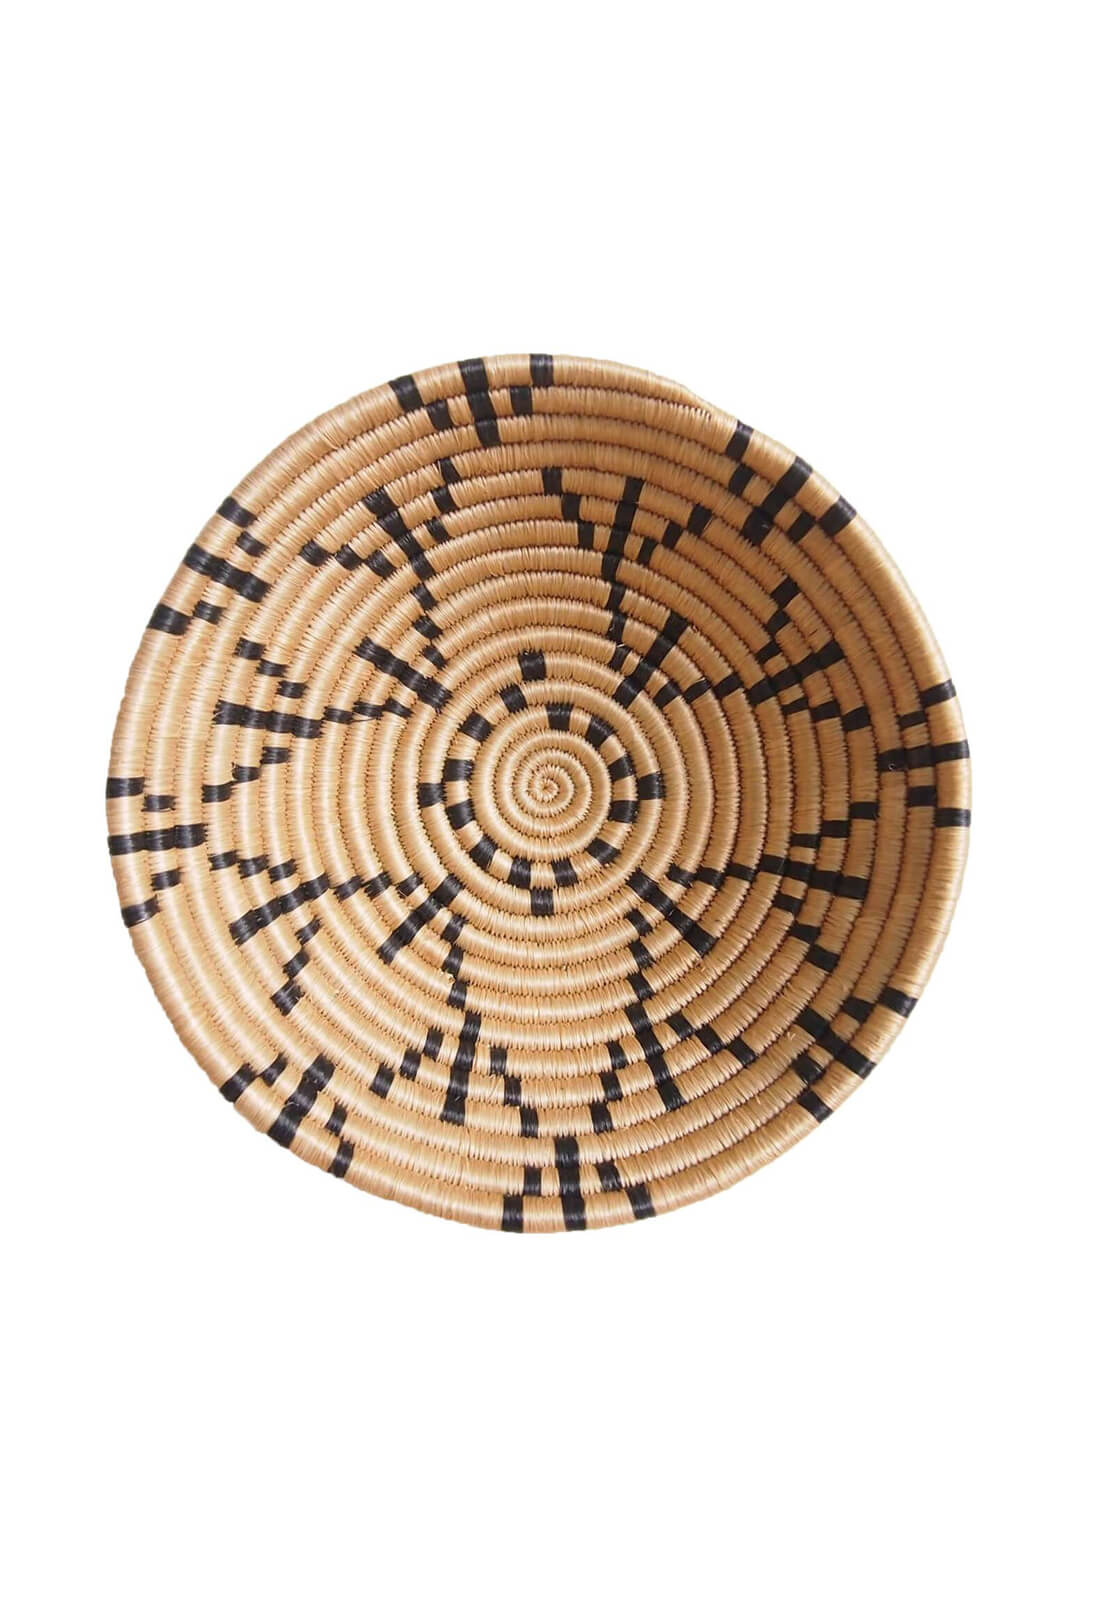 Hand Woven Mugusa Basket - Tan and Black, Small